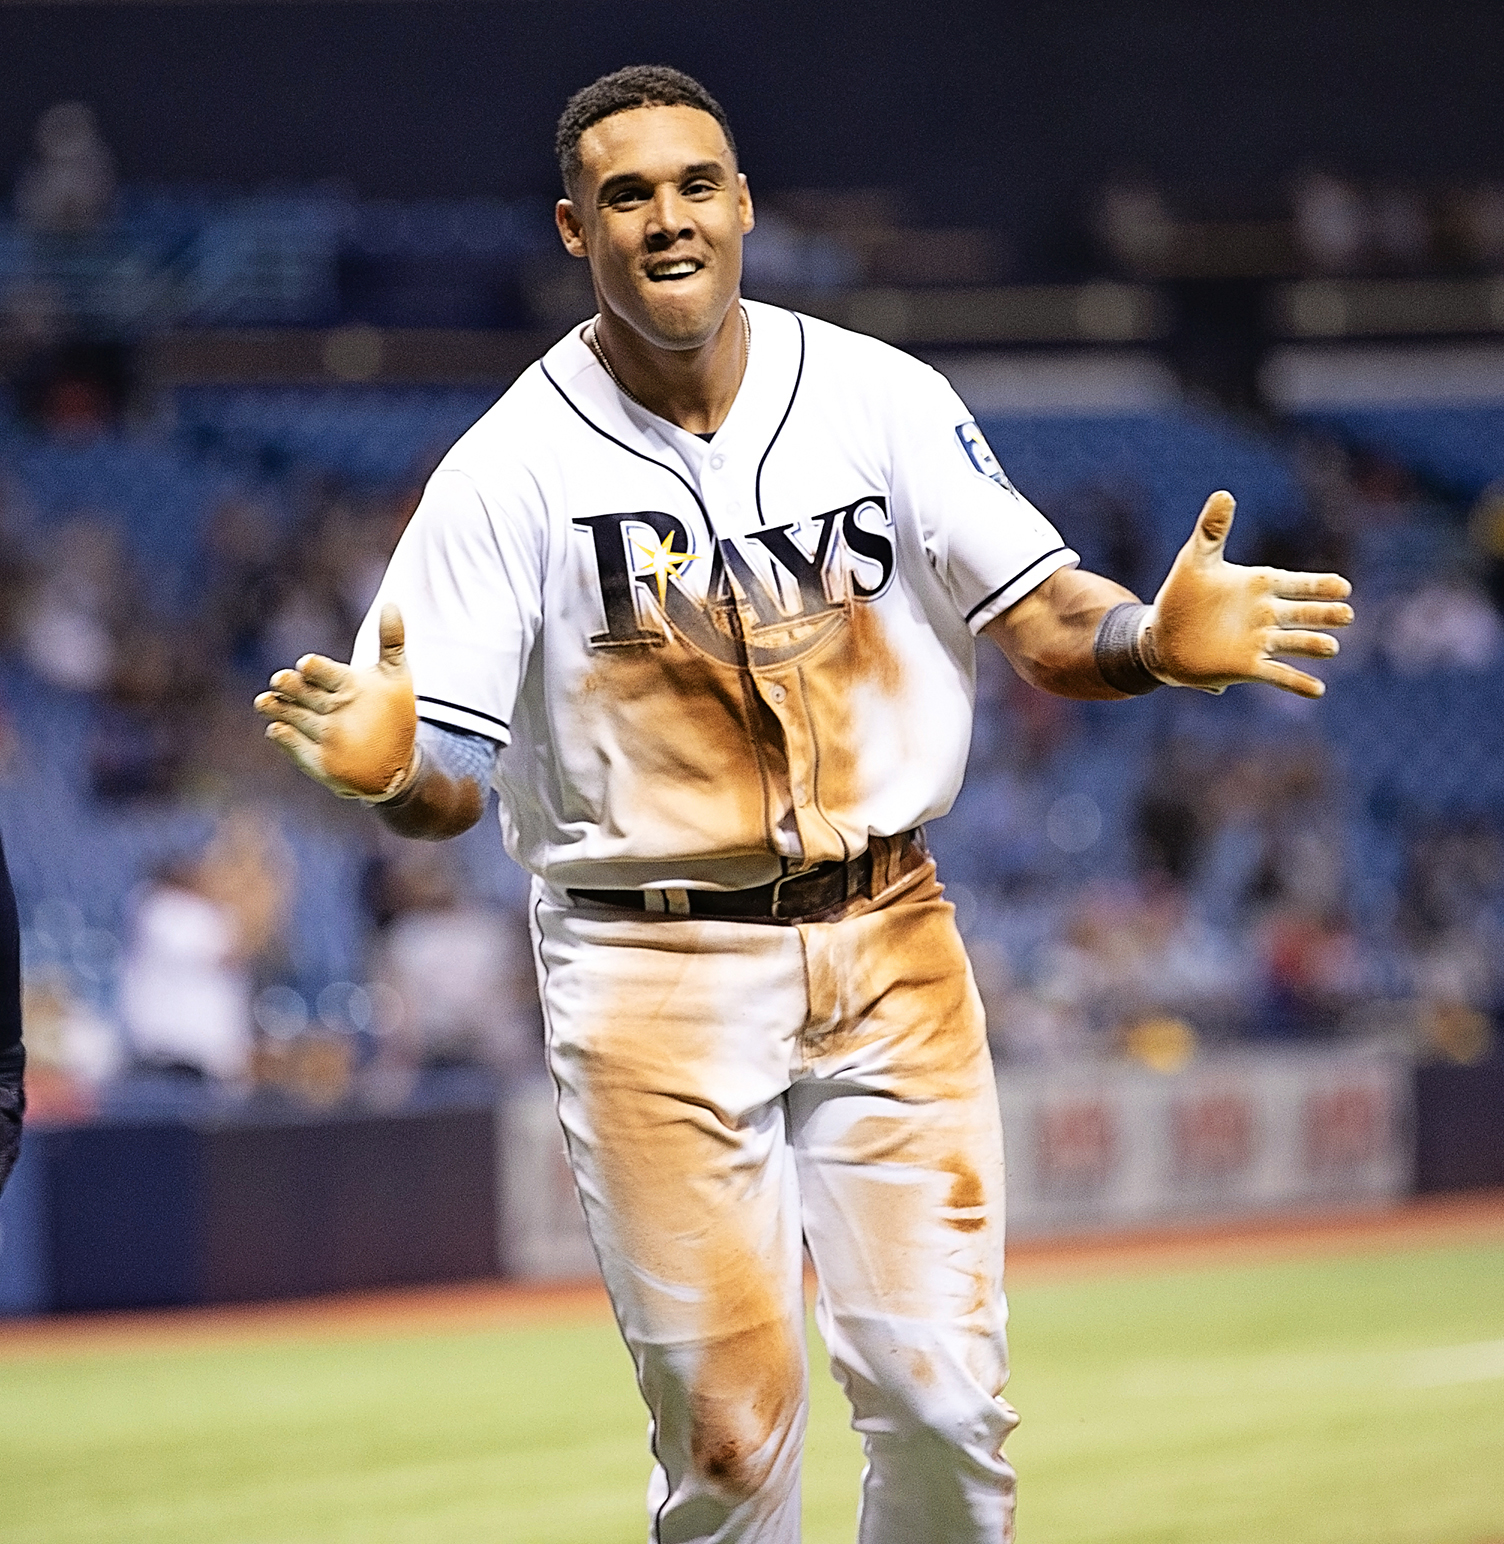 Gomez hit a home run for the Rays./CARMEN MANDATO